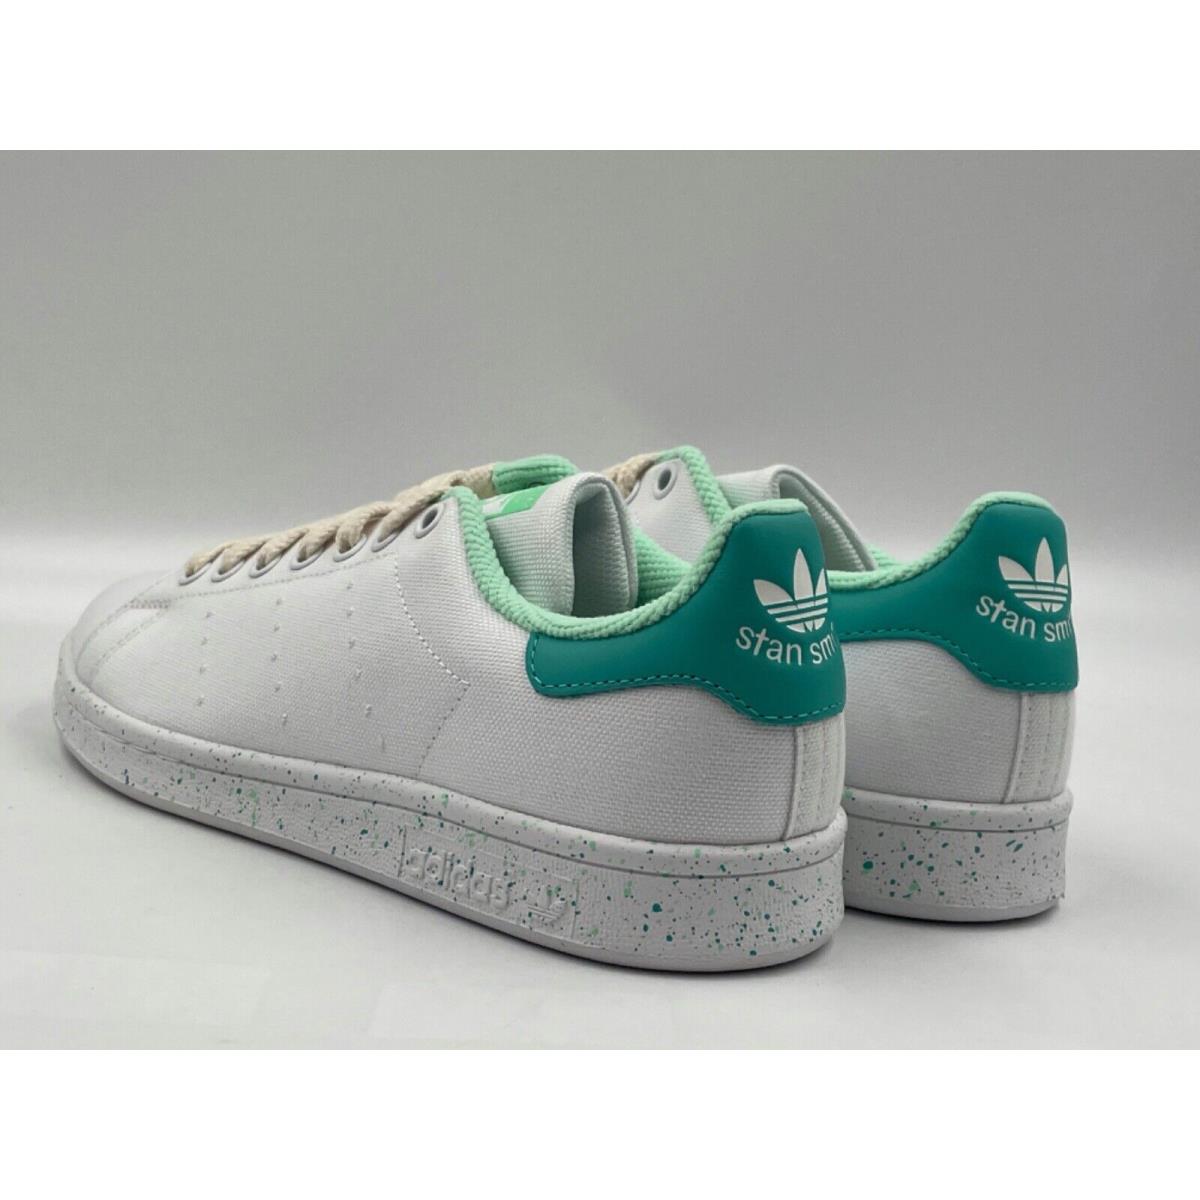 Adidas Stan Smith Men Casual Retro Tennis Shoe White Mint Green Sneaker Trainer | 692740833071 - Adidas shoes Stan Smith - White Ivory | SporTipTop